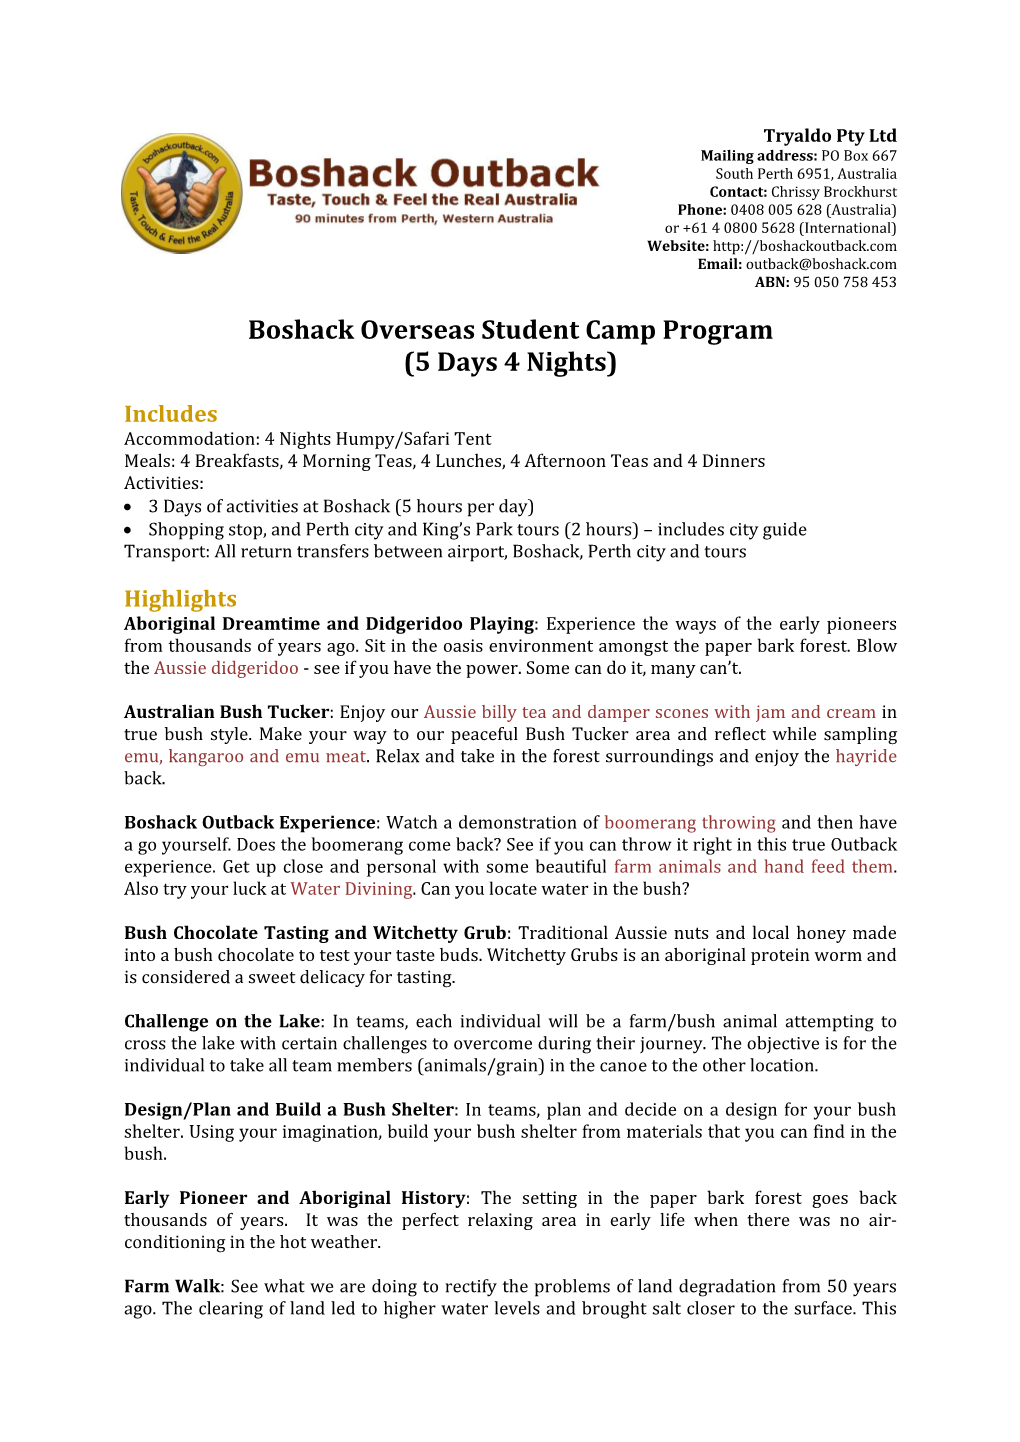 Boshack Overseas Student Camp Program (5 Days 4 Nights)